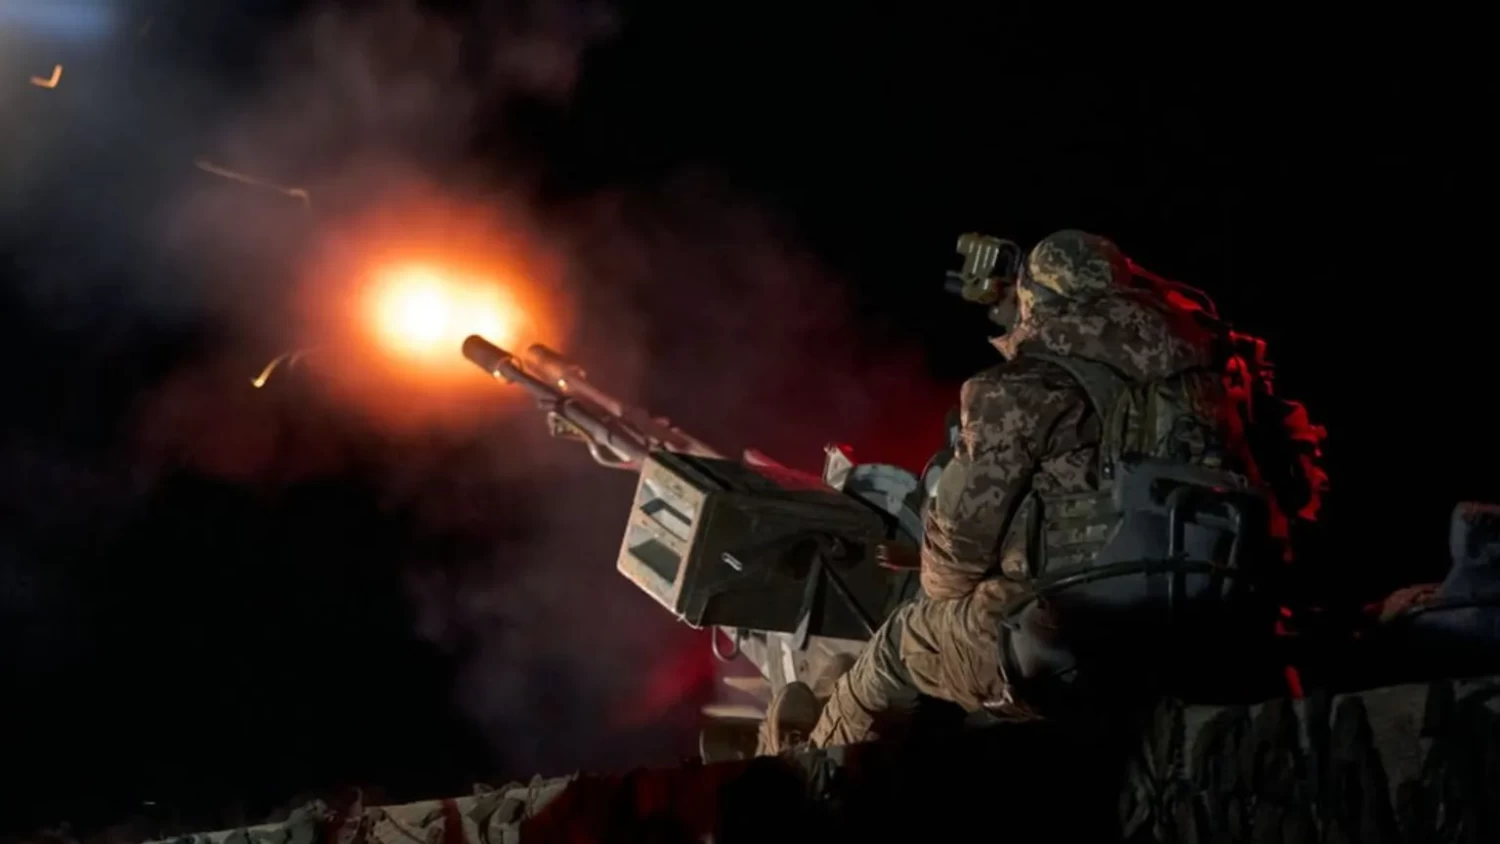 Getty Images, Ukraine gunner in action in an undisclosed location in Ukraine this week